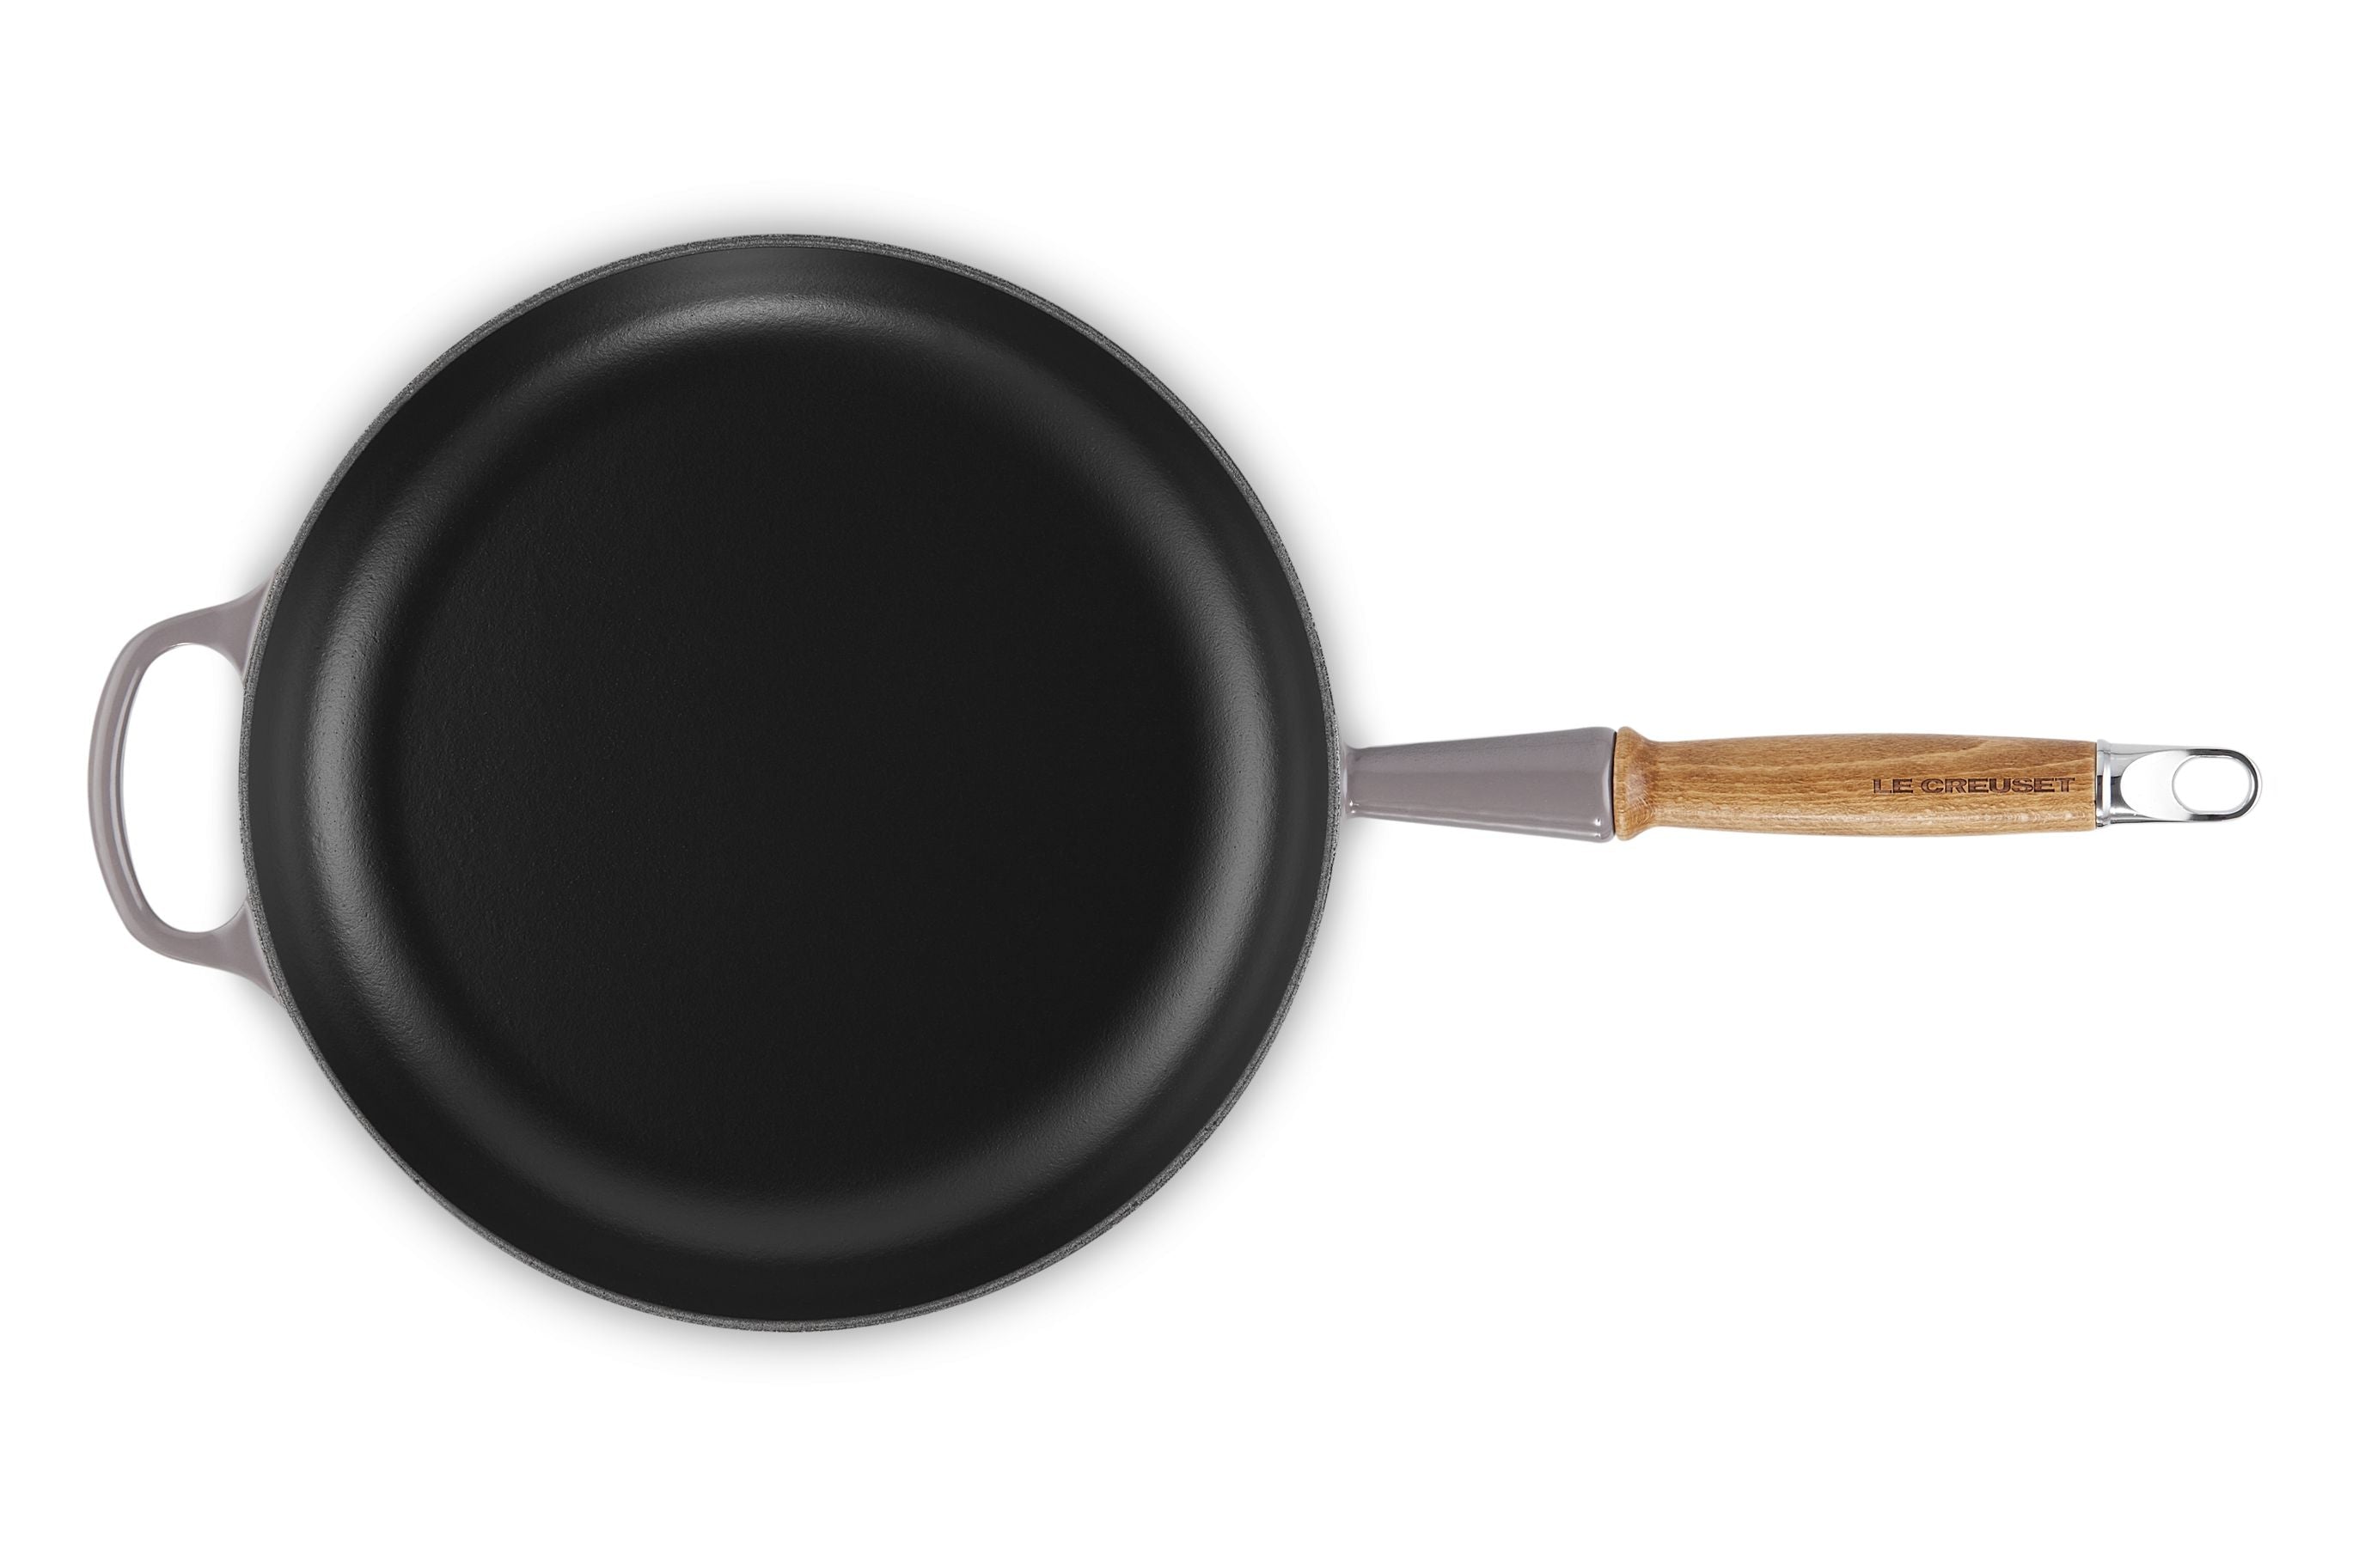 Le Creuset Cast Iron Frying Pan With Wooden Handle 28 Cm, Flint